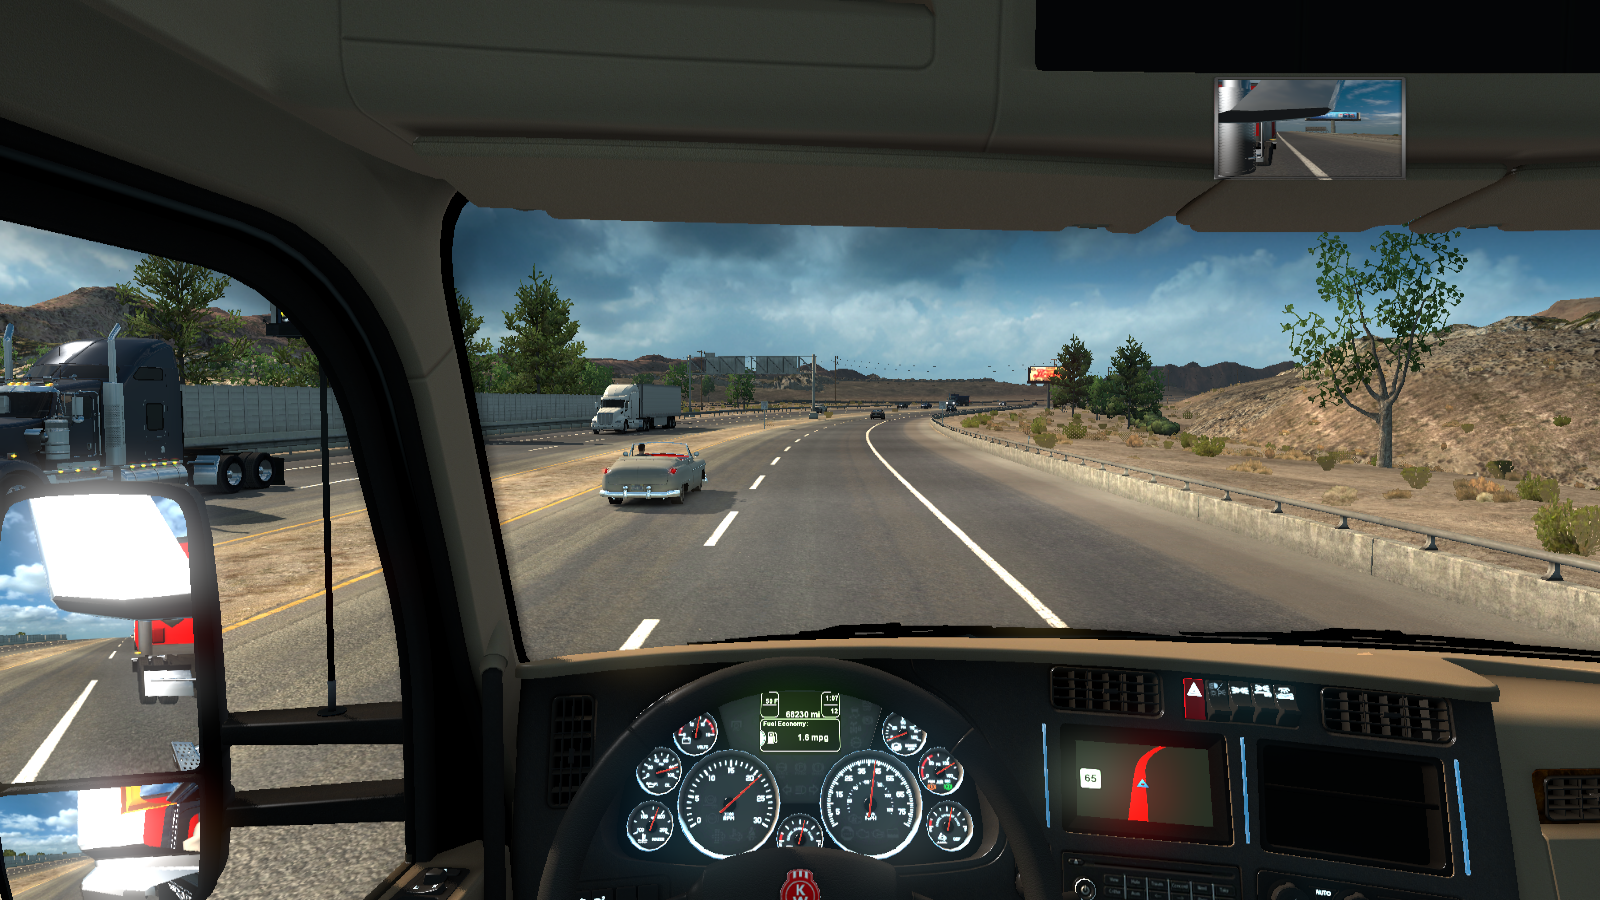 ats american truck simulator indir pc